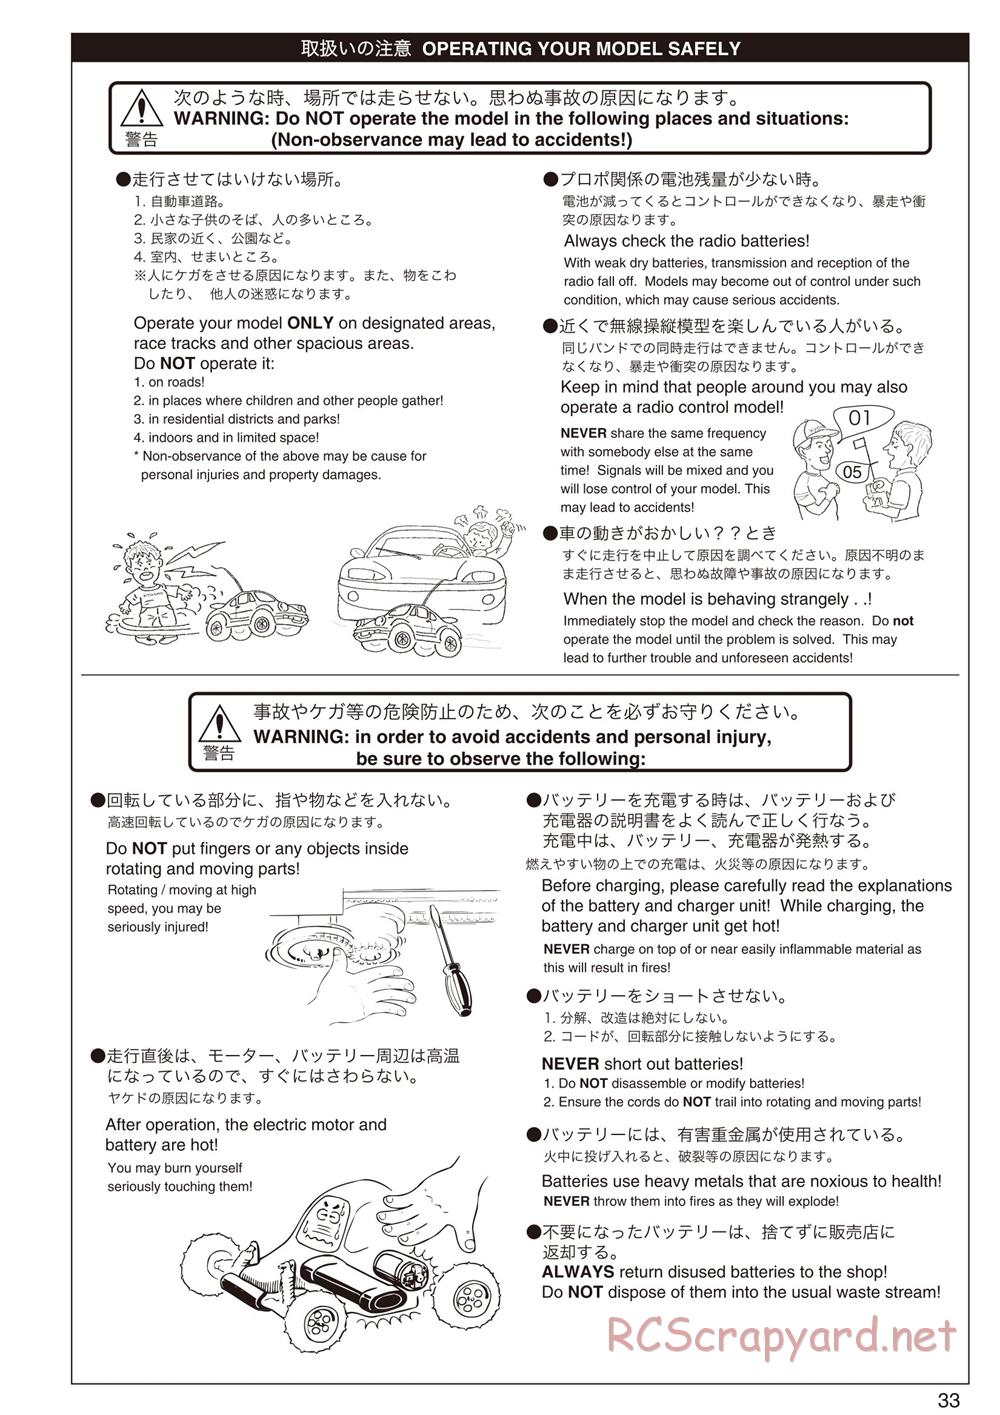 Kyosho - Lazer ZX-5 FS - Manual - Page 33